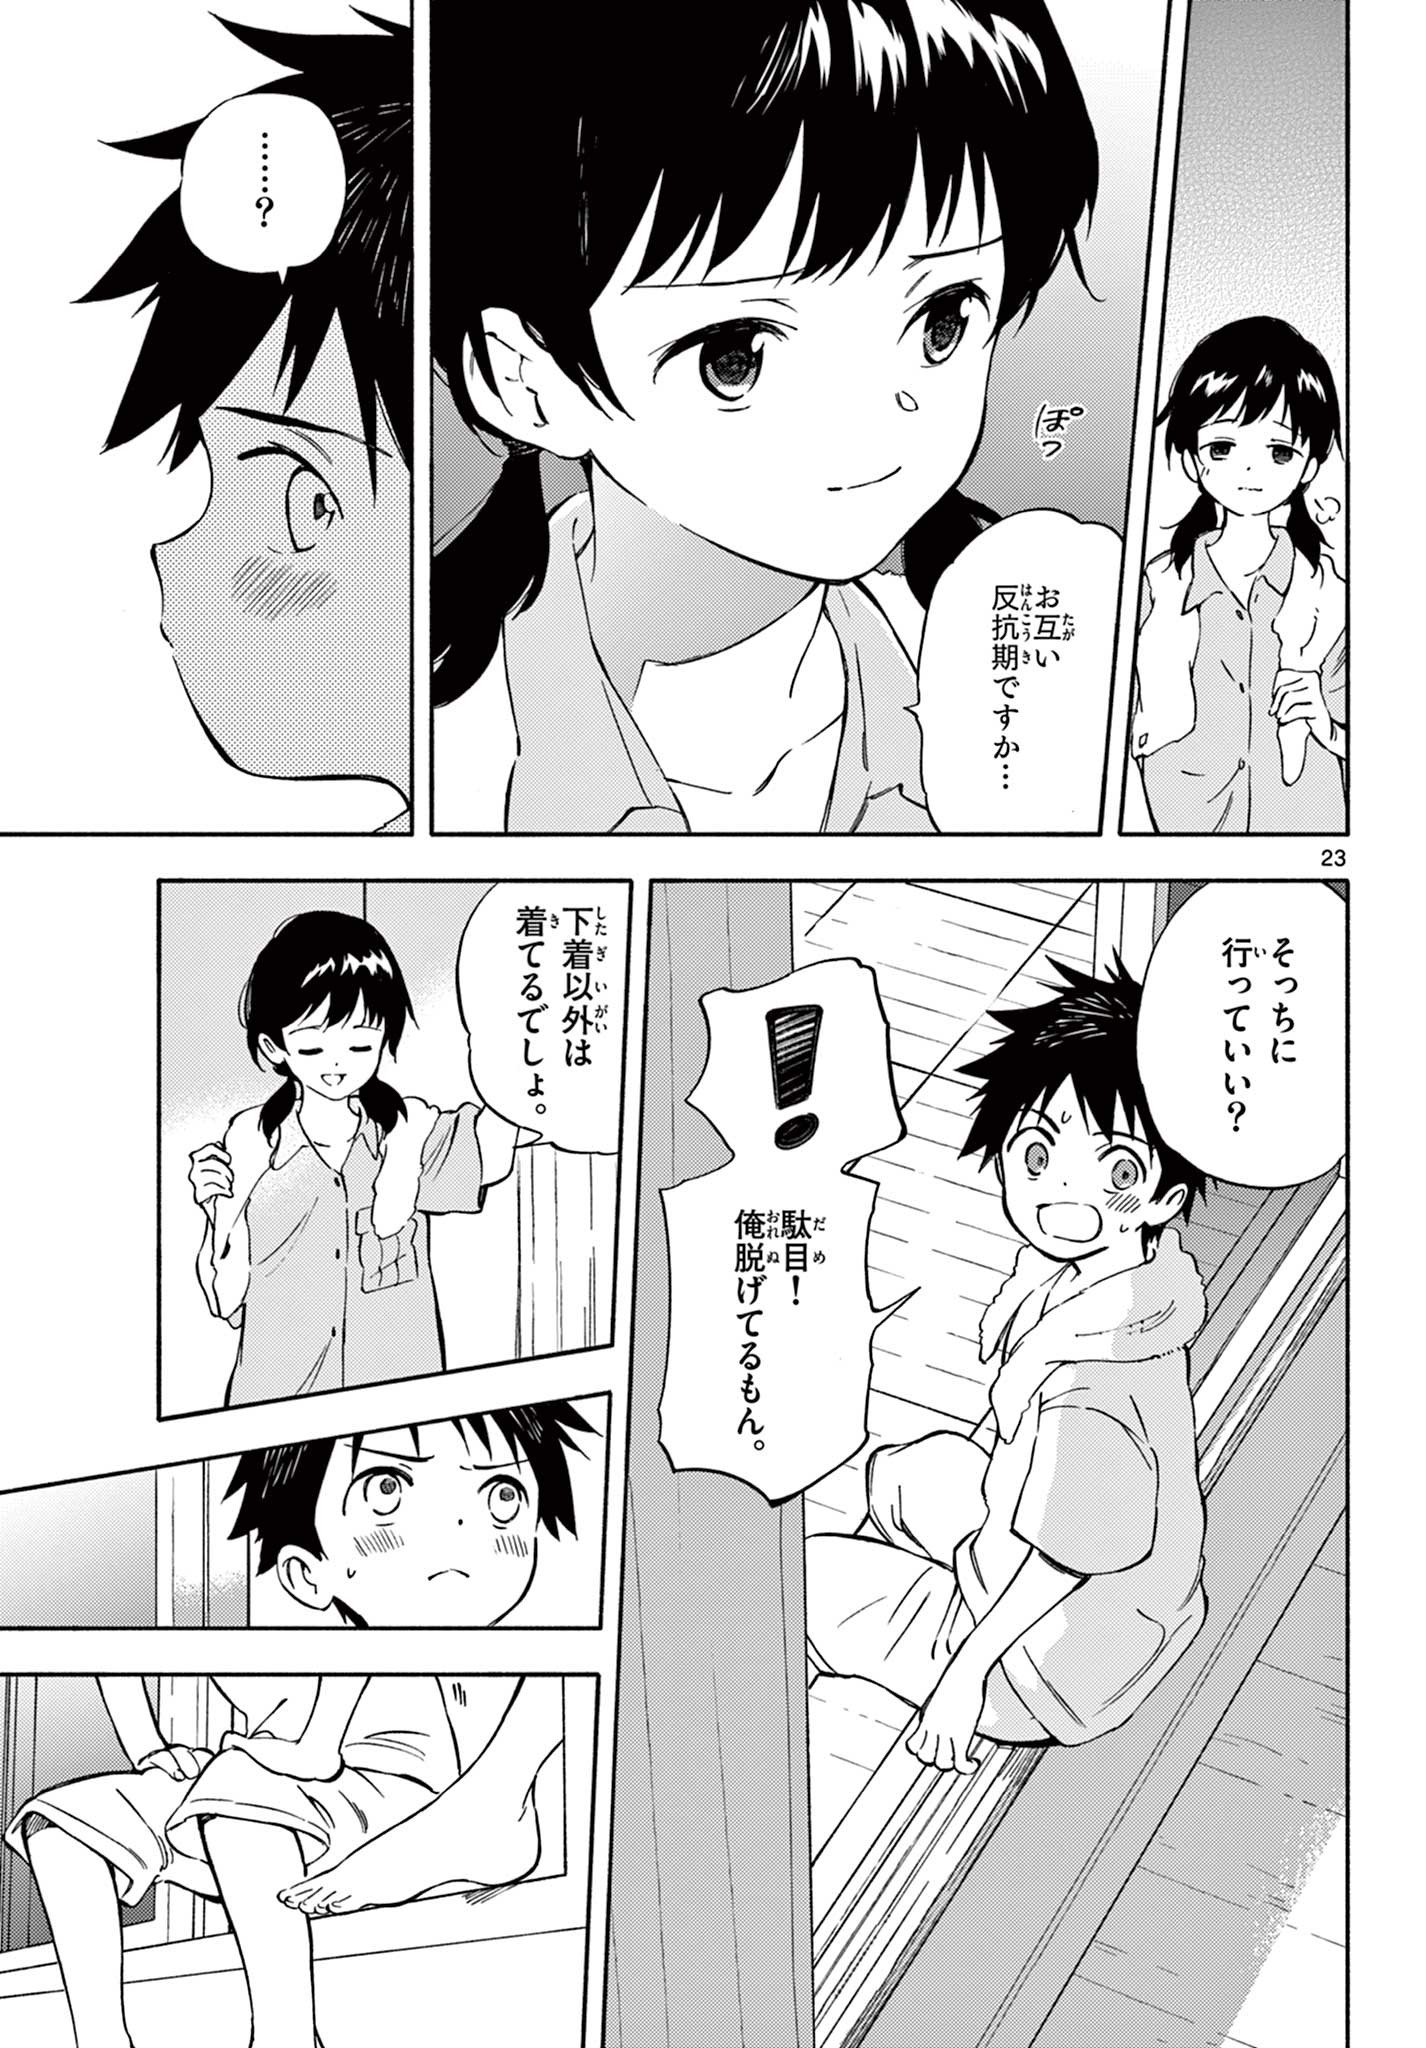 Nami no Shijima no Horizont - Chapter 12.2 - Page 9